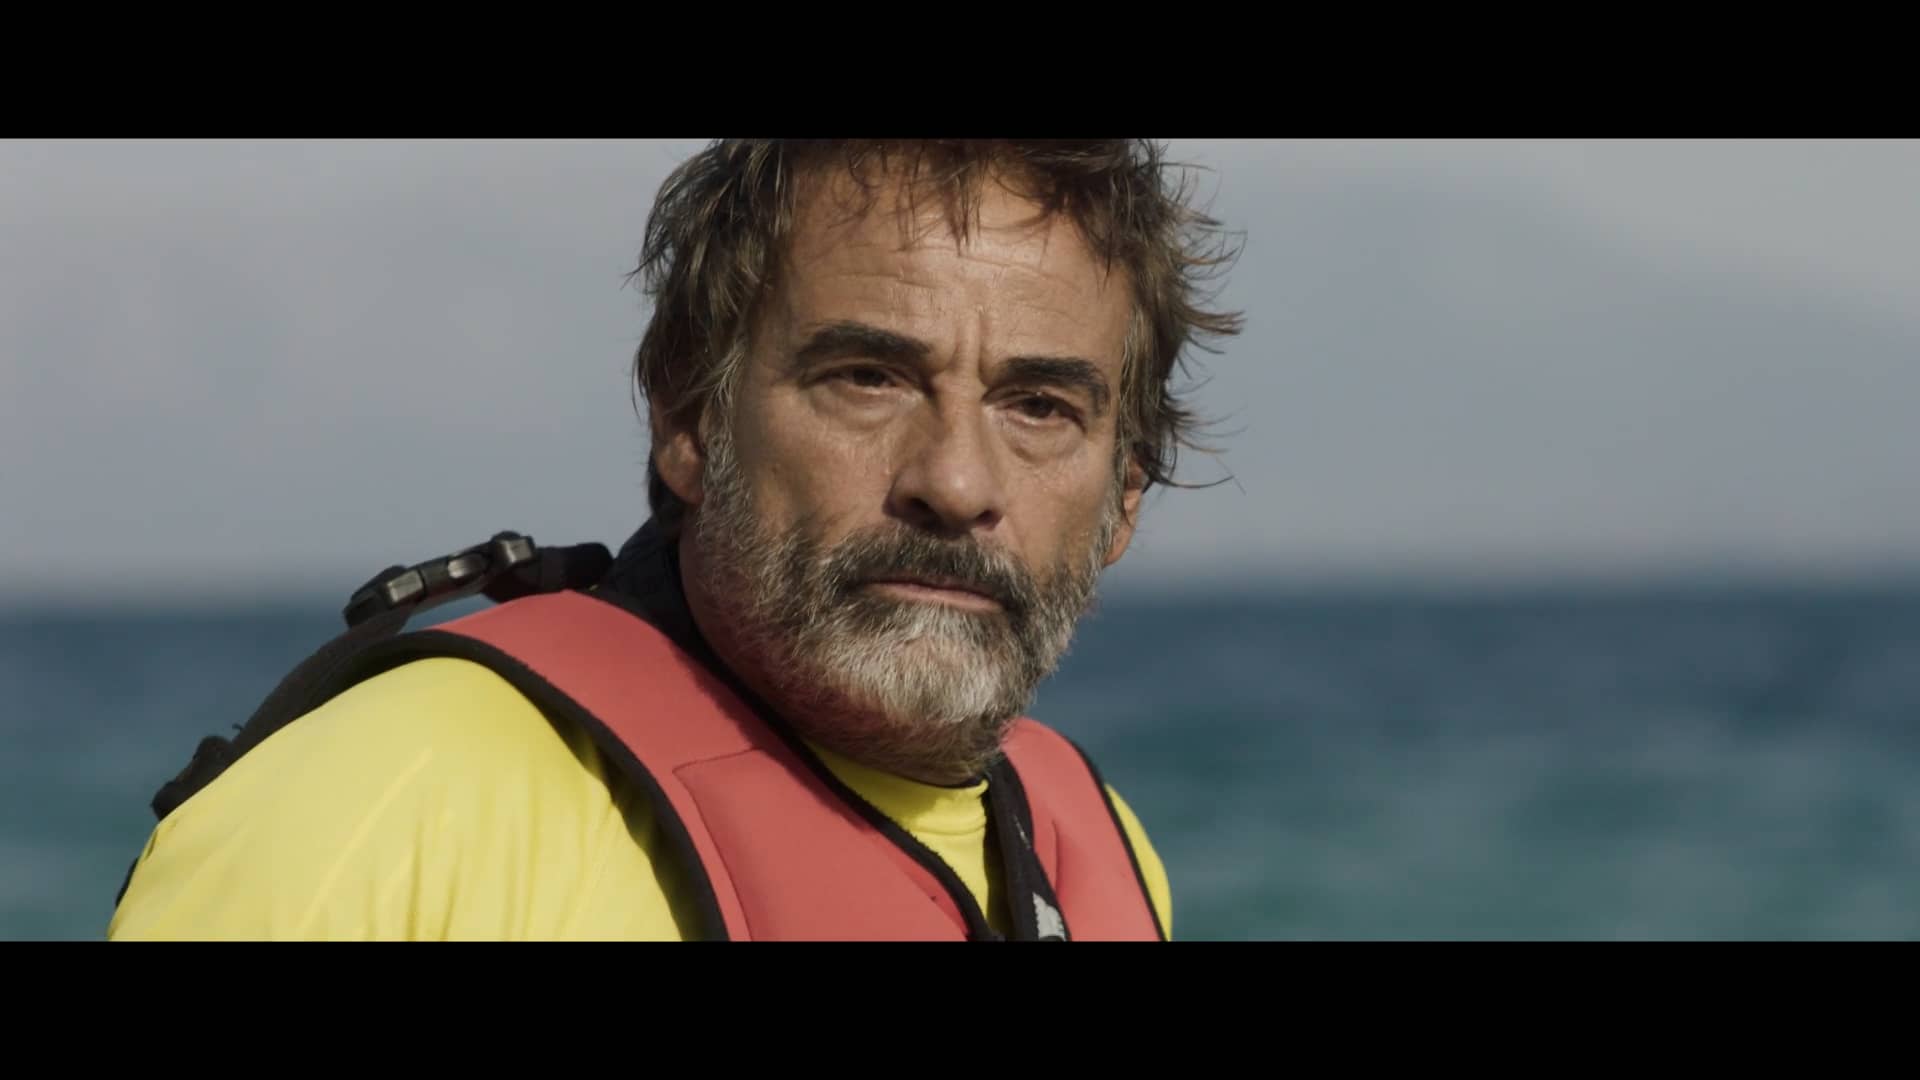 MEDITERRANEO: THE LAW OF THE SEA trailer on Vimeo